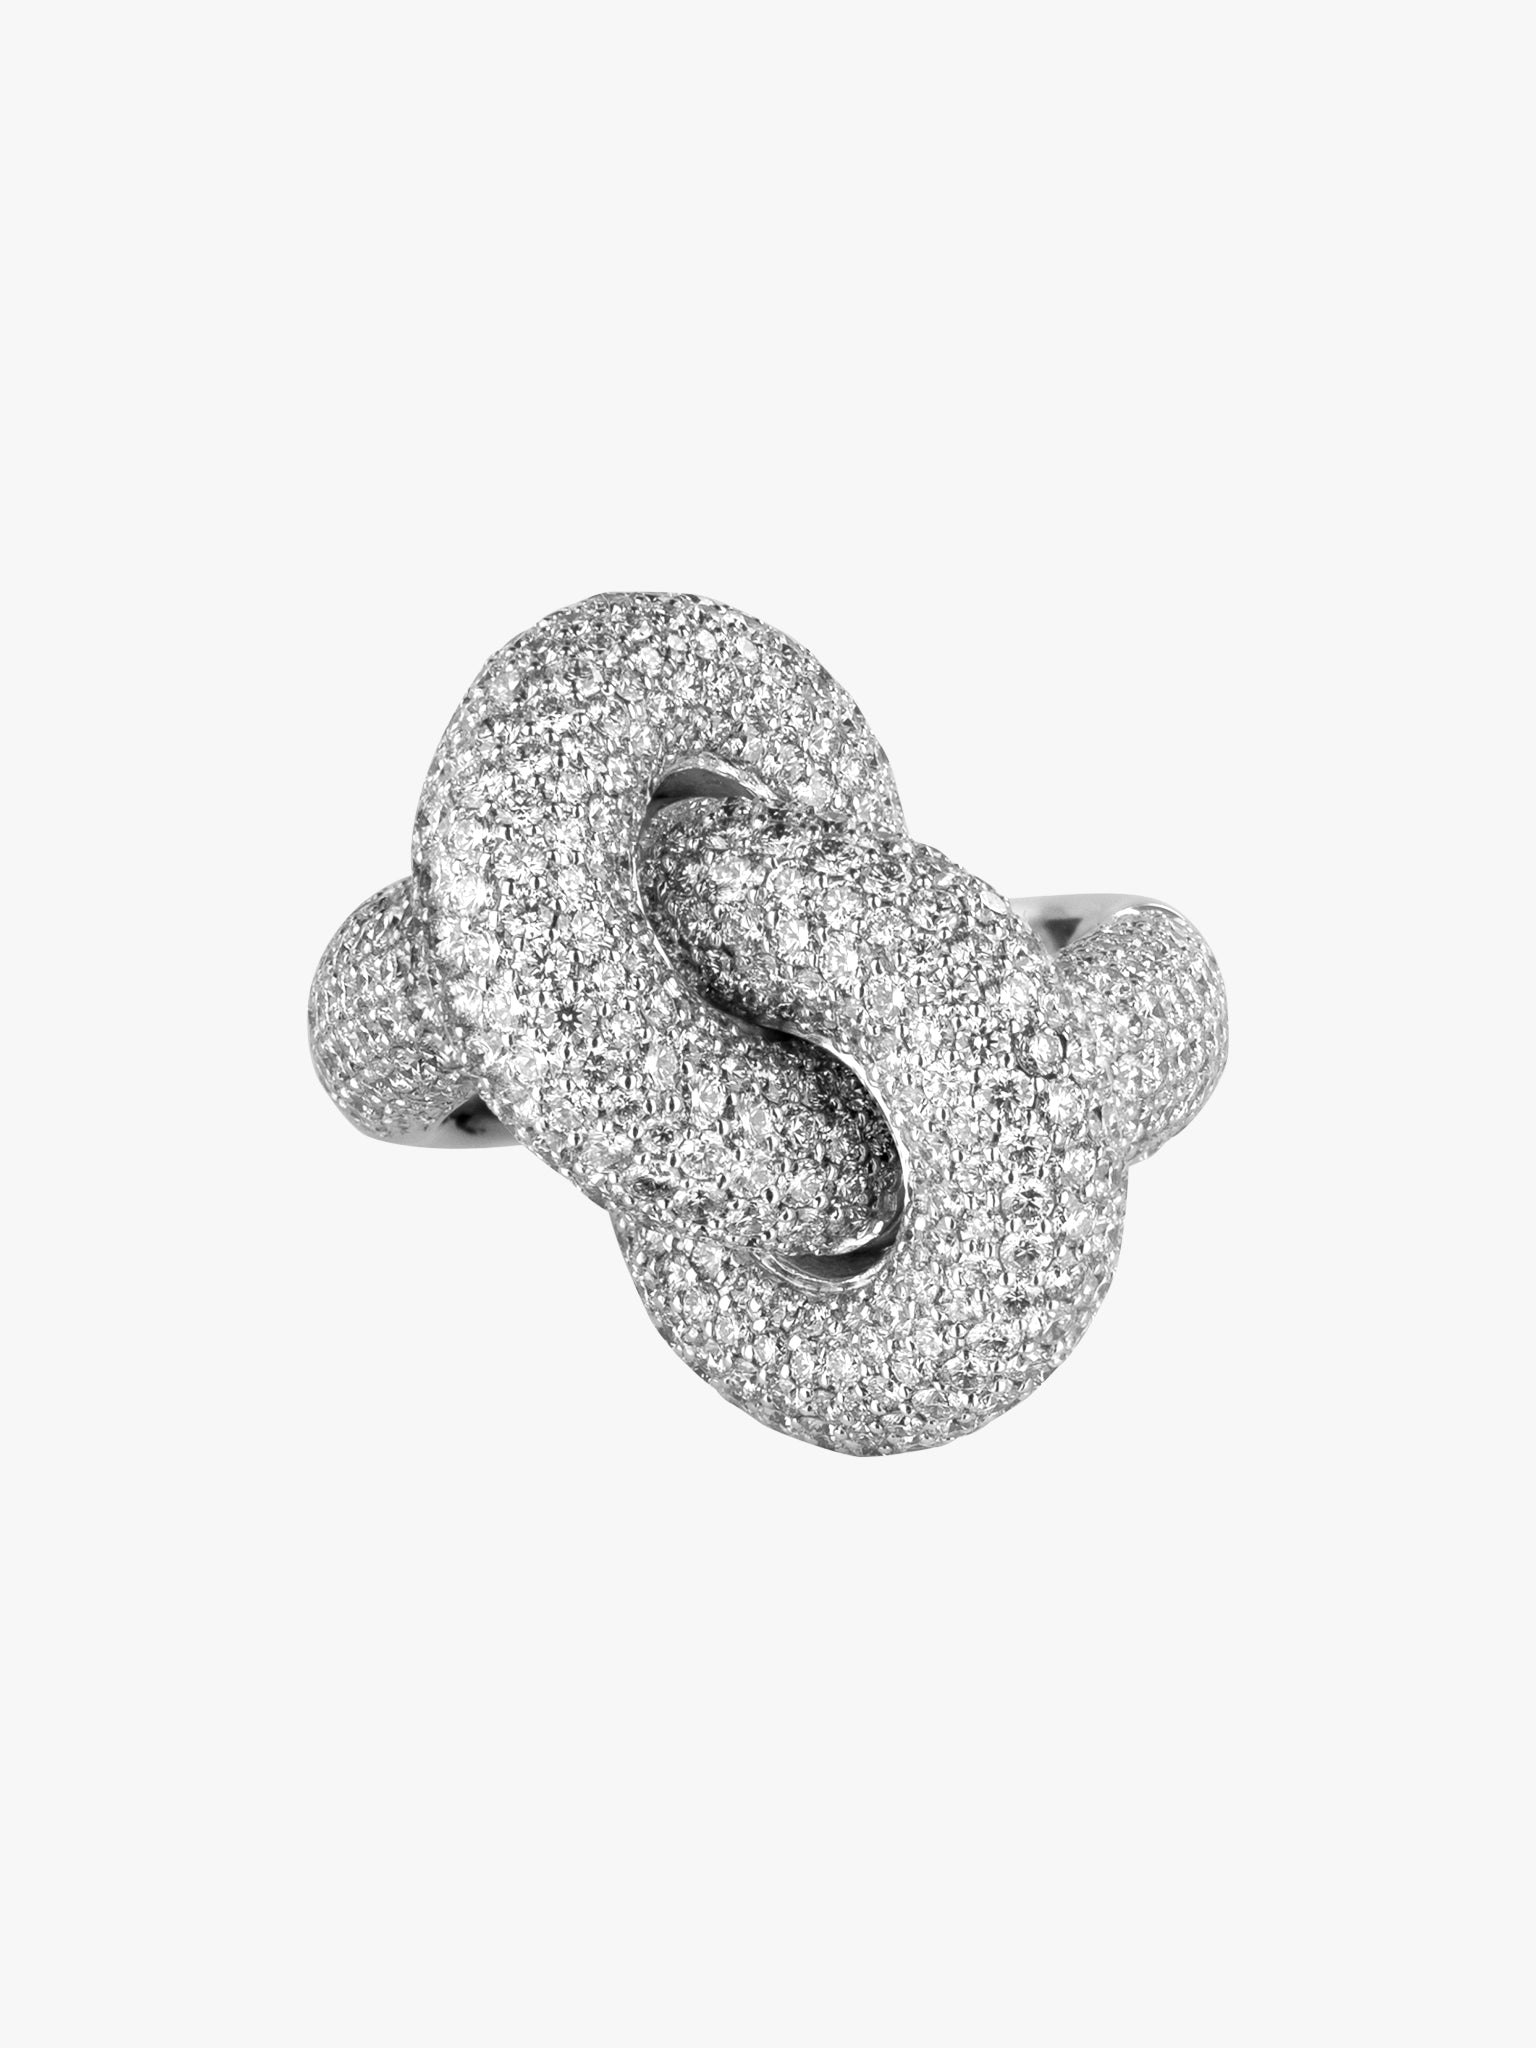 Absolutely fat knot pavé diamond ring photo 1